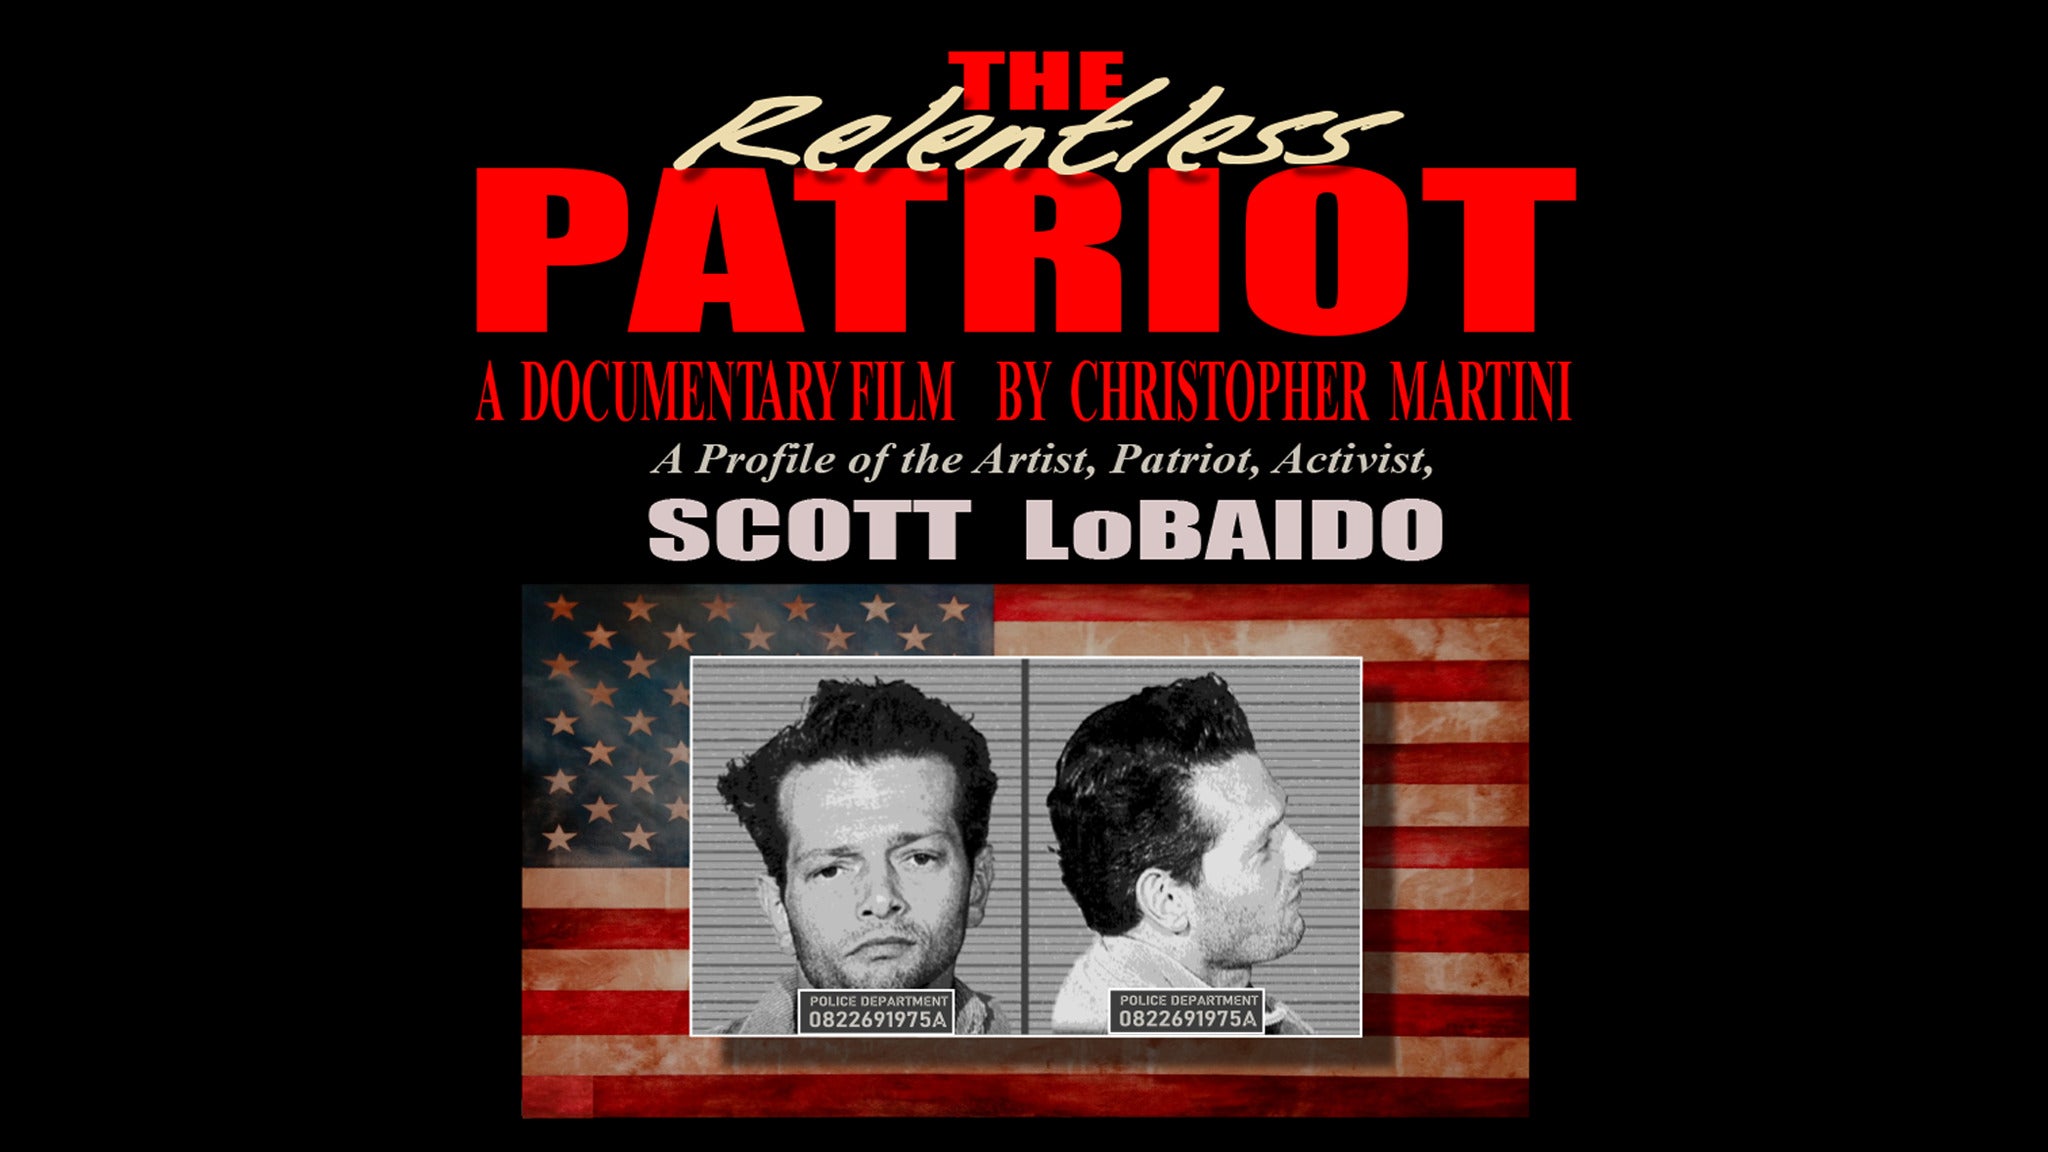 Scott LoBaido "The Relentless Patriot" - Movie Premiere in Staten Island promo photo for SGT Member presale offer code